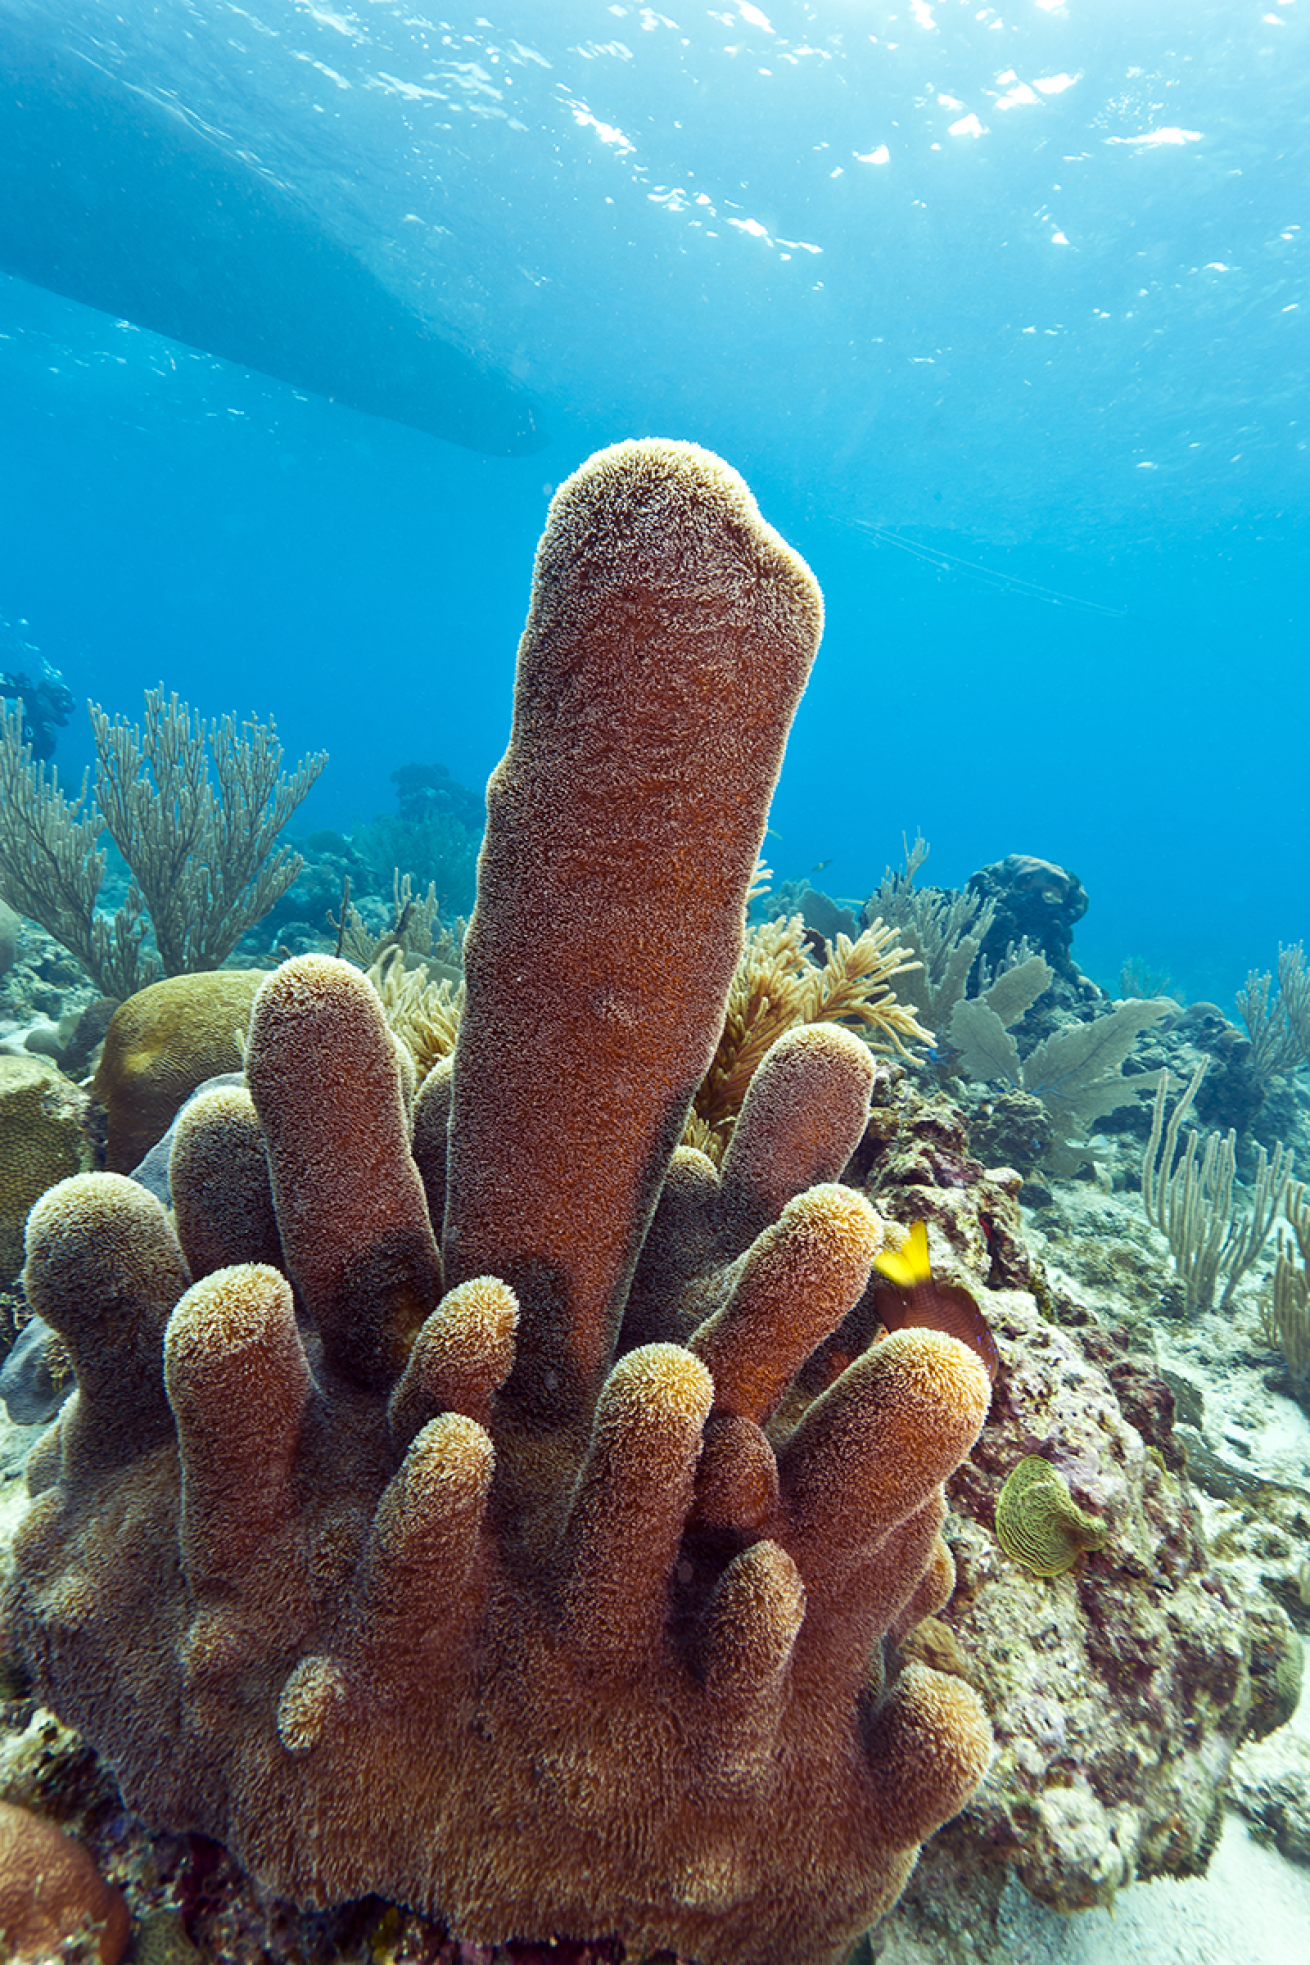 A pillar coral in the sea.